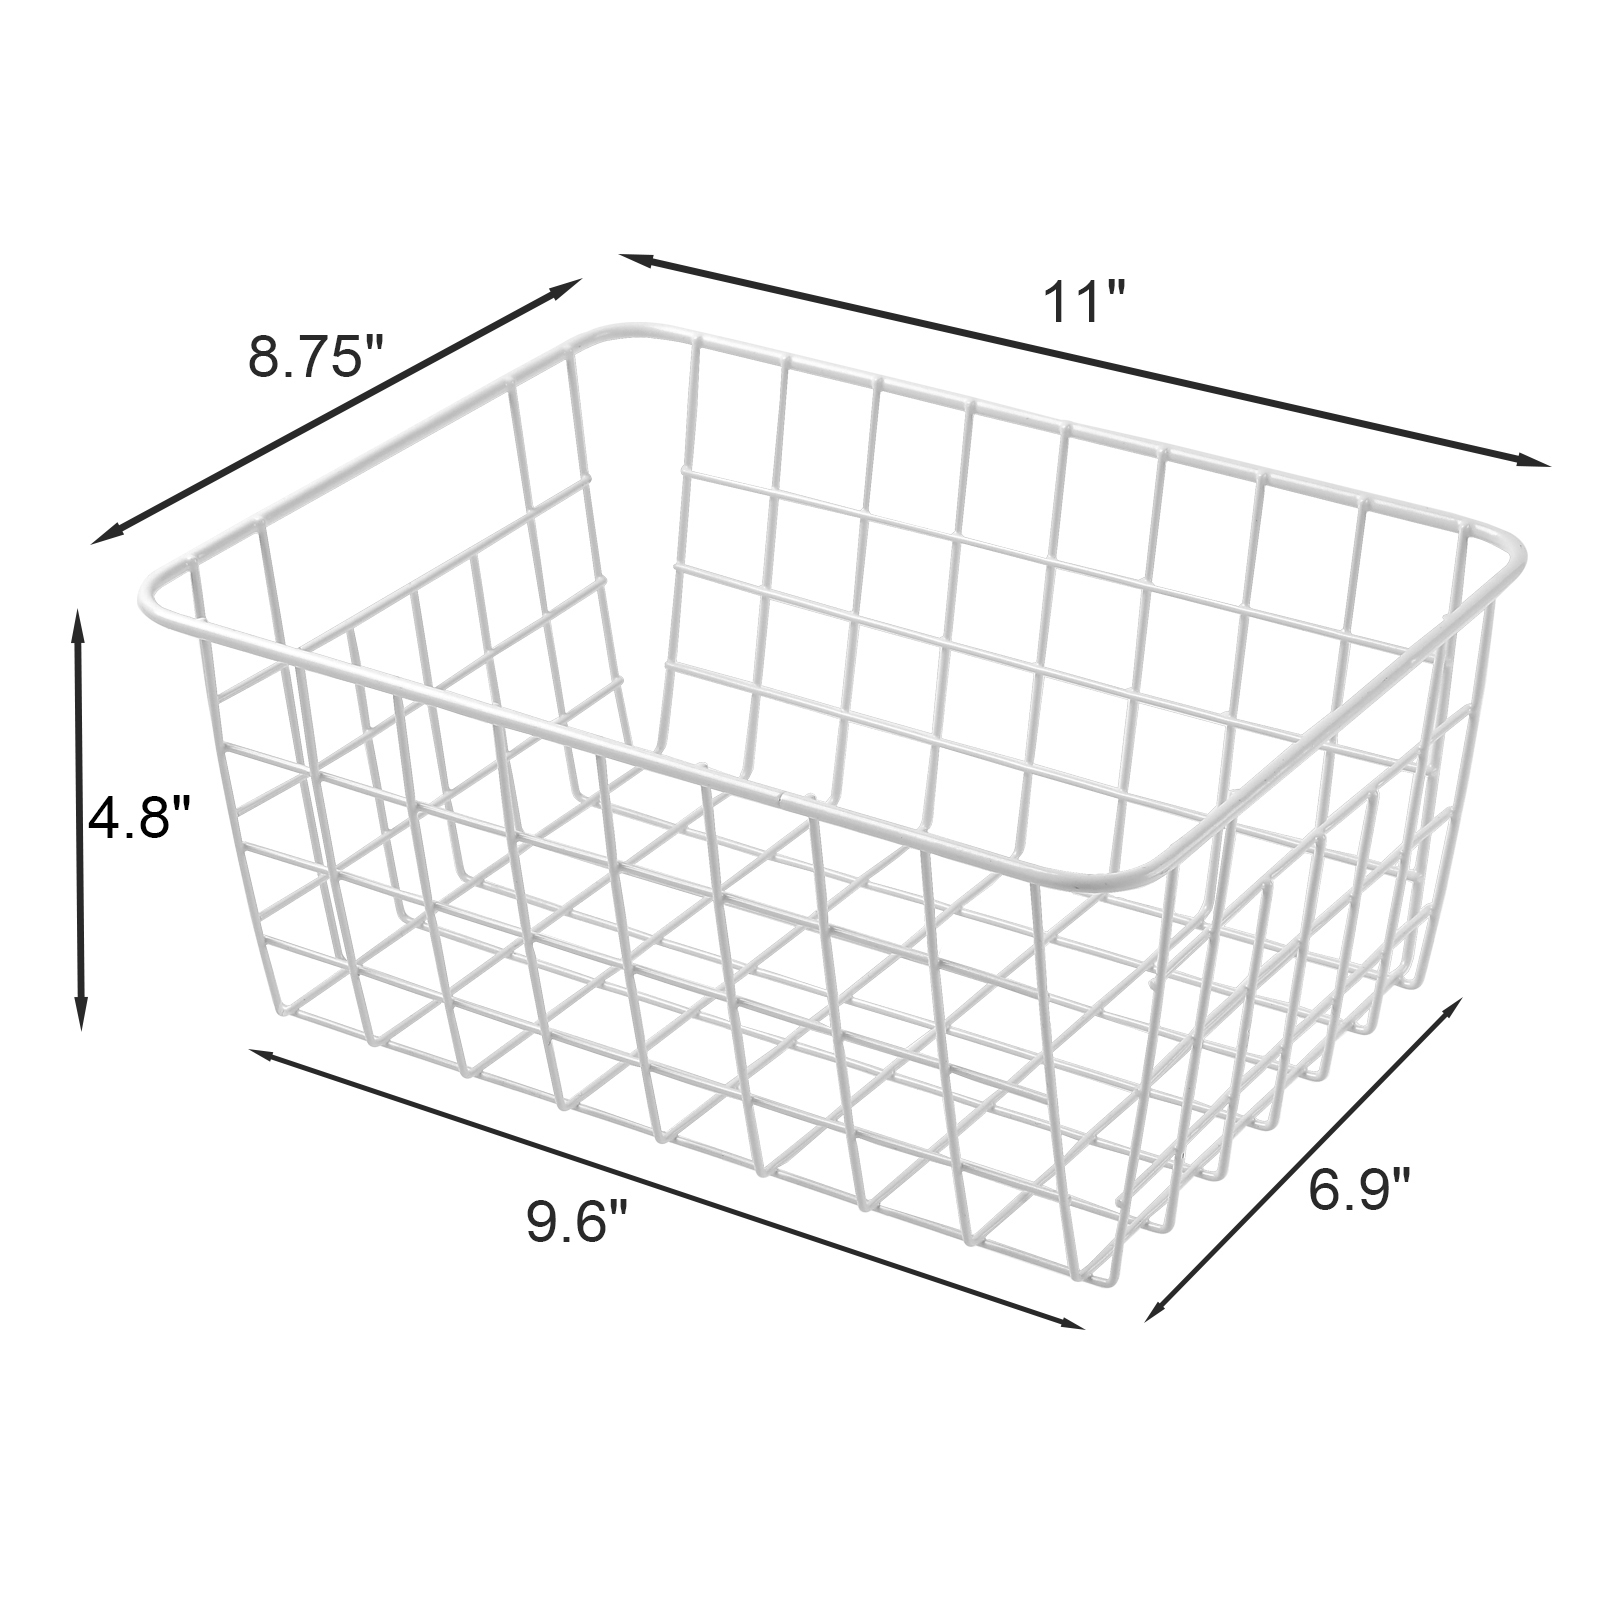 11 Upright Freezer Storage Baskets, White Wire Storage Bins Small Bakset  for Freezer, Pantry, Bathroom Organizing, Set of 4 